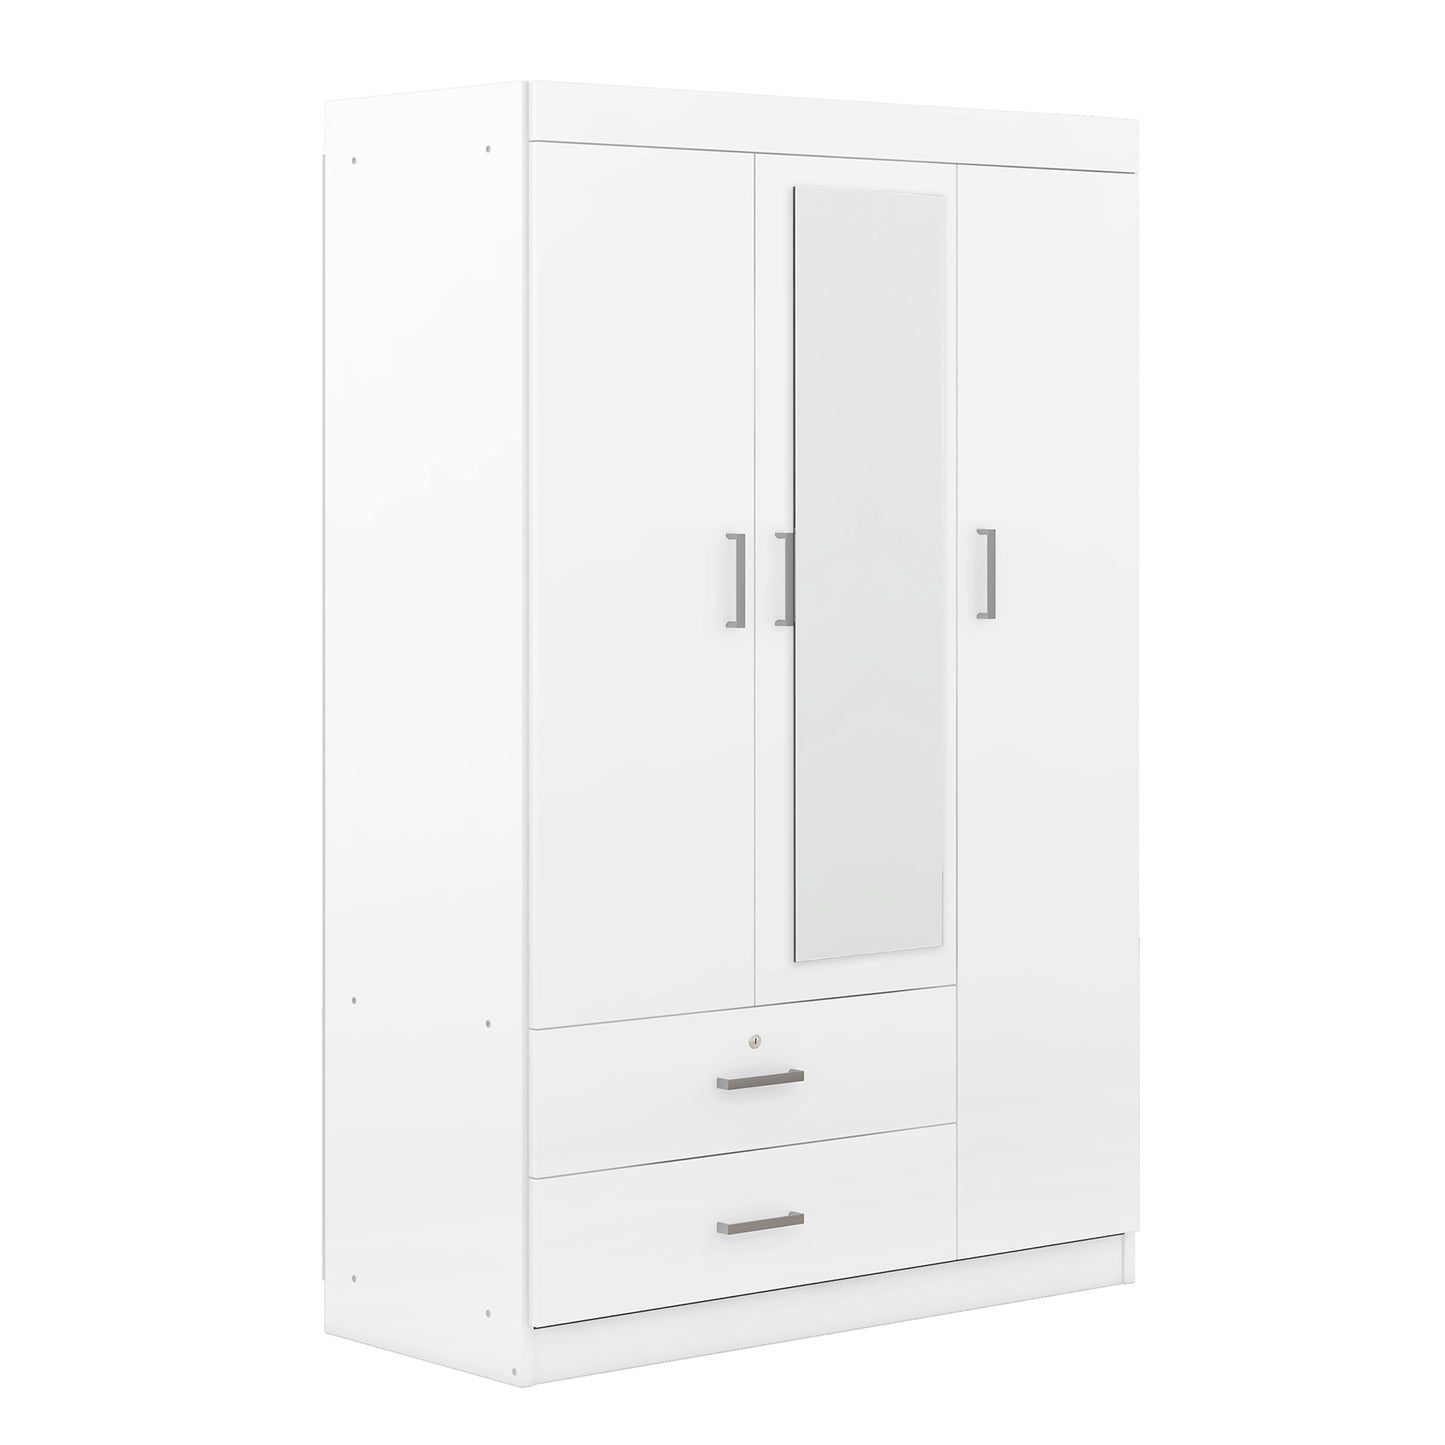 3-Door Mirror Wardrobe with shelves in White